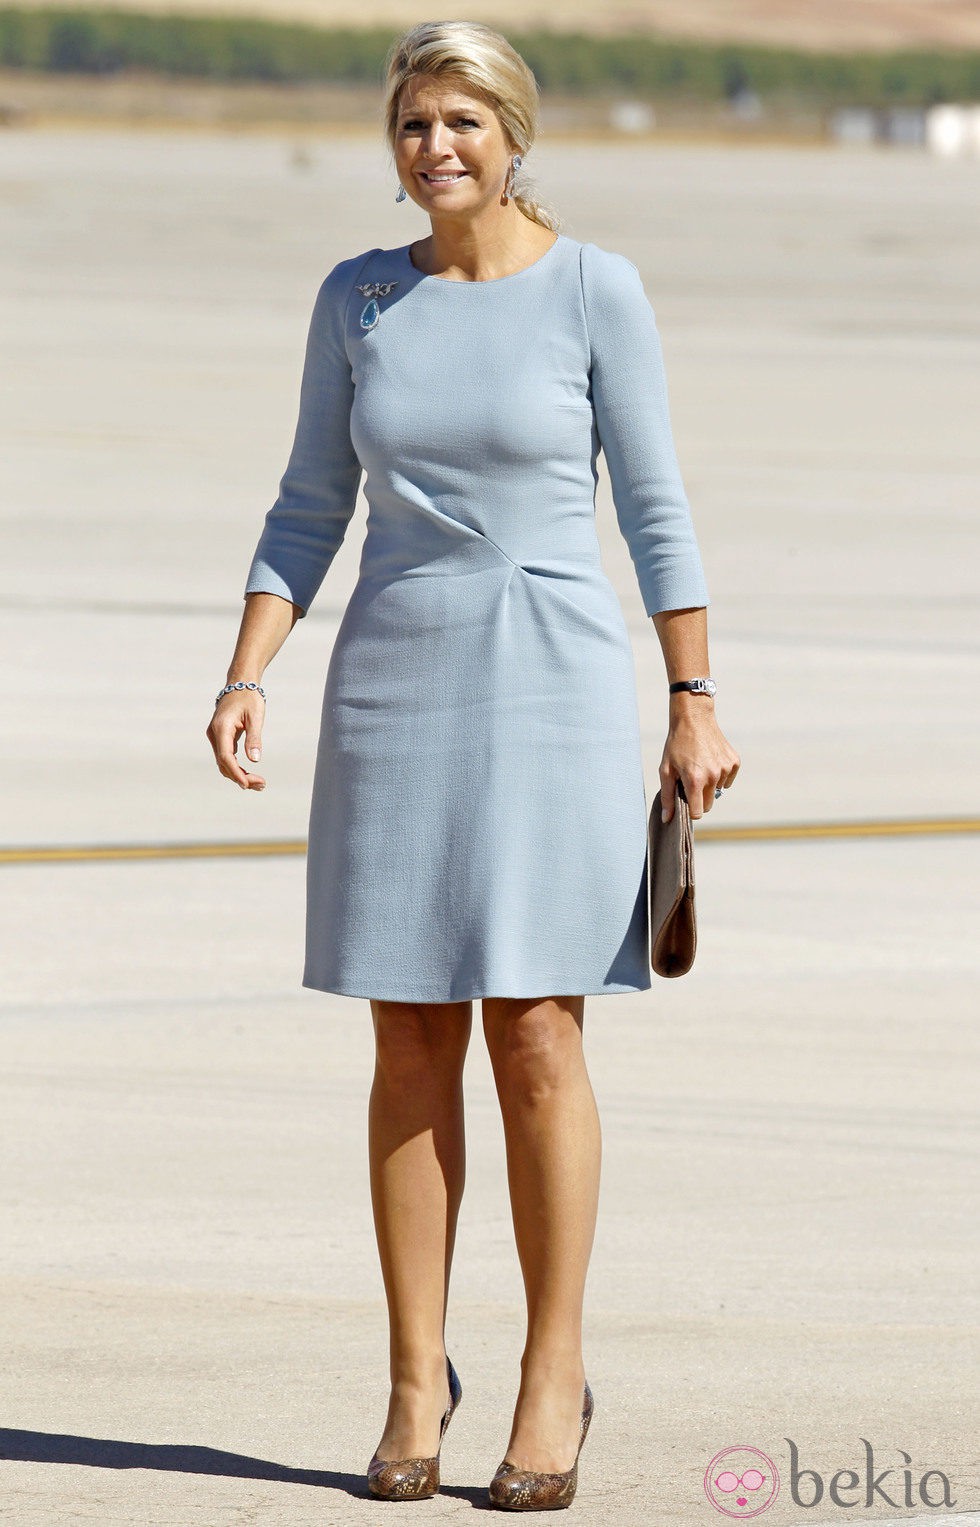 Máxima de Holanda en su primera visita a España como Reina